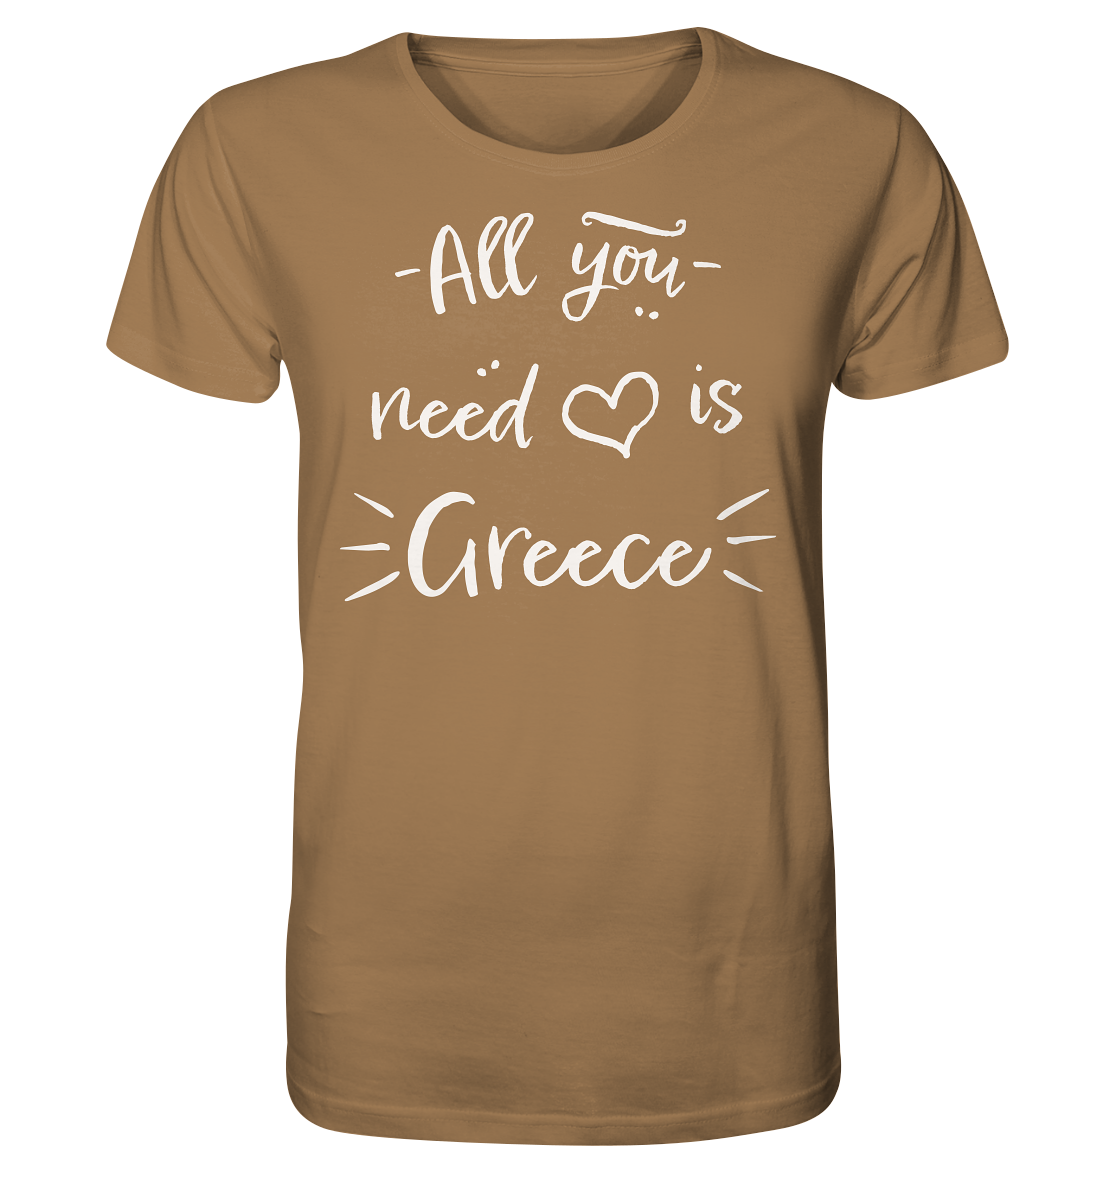 All you need is Greece - Organic Shirt